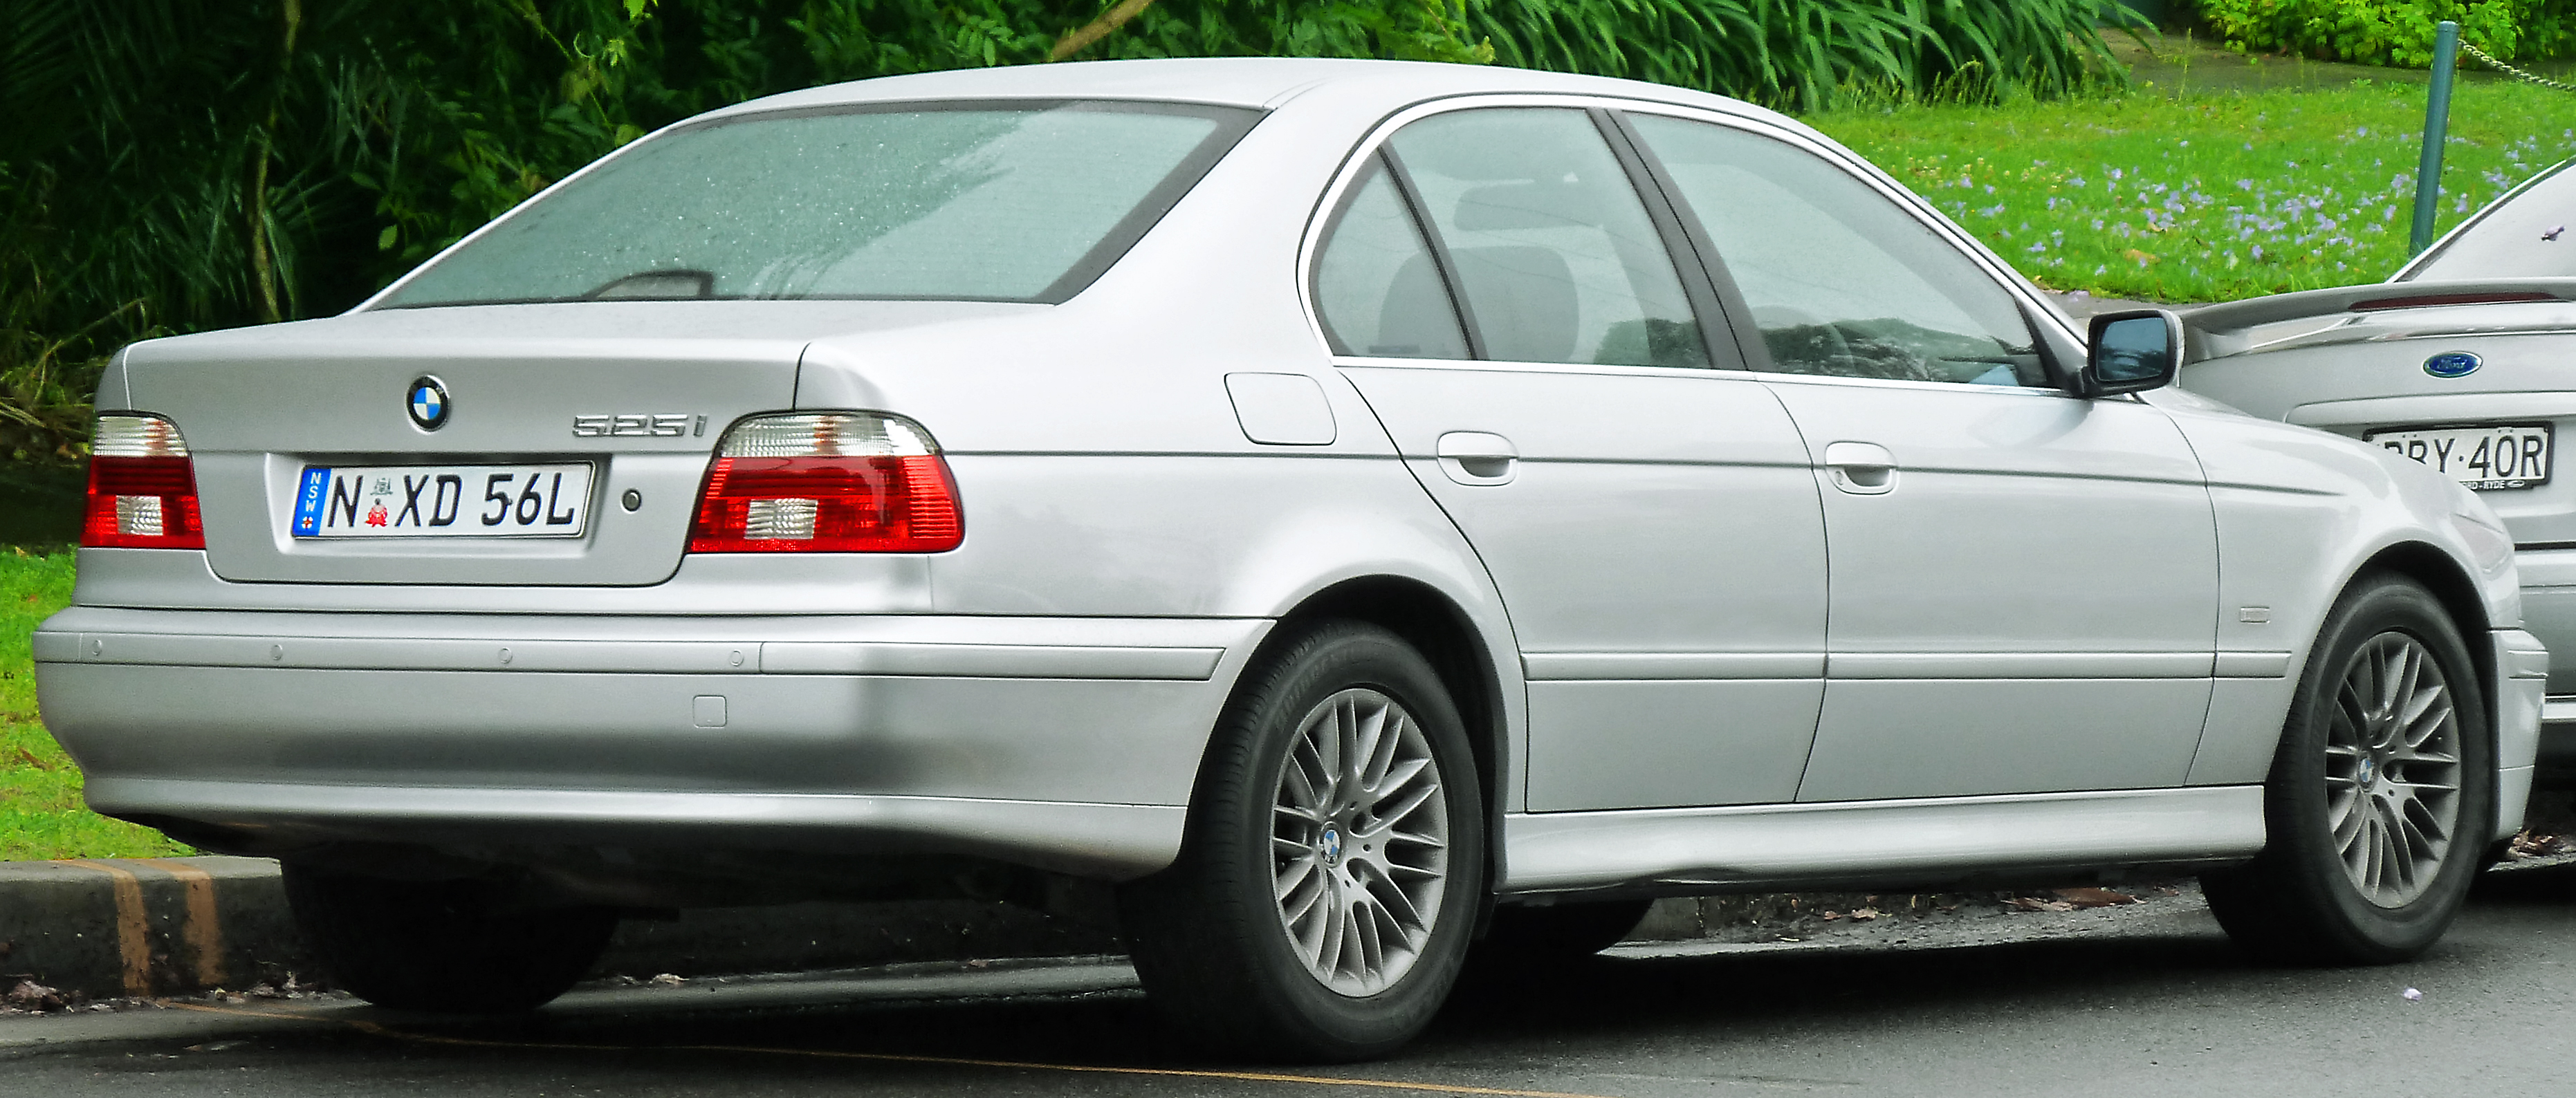 File:2000-2003 BMW 525i (E39) Executive sedan (2011-11-17).jpg - Wikimedia  Commons